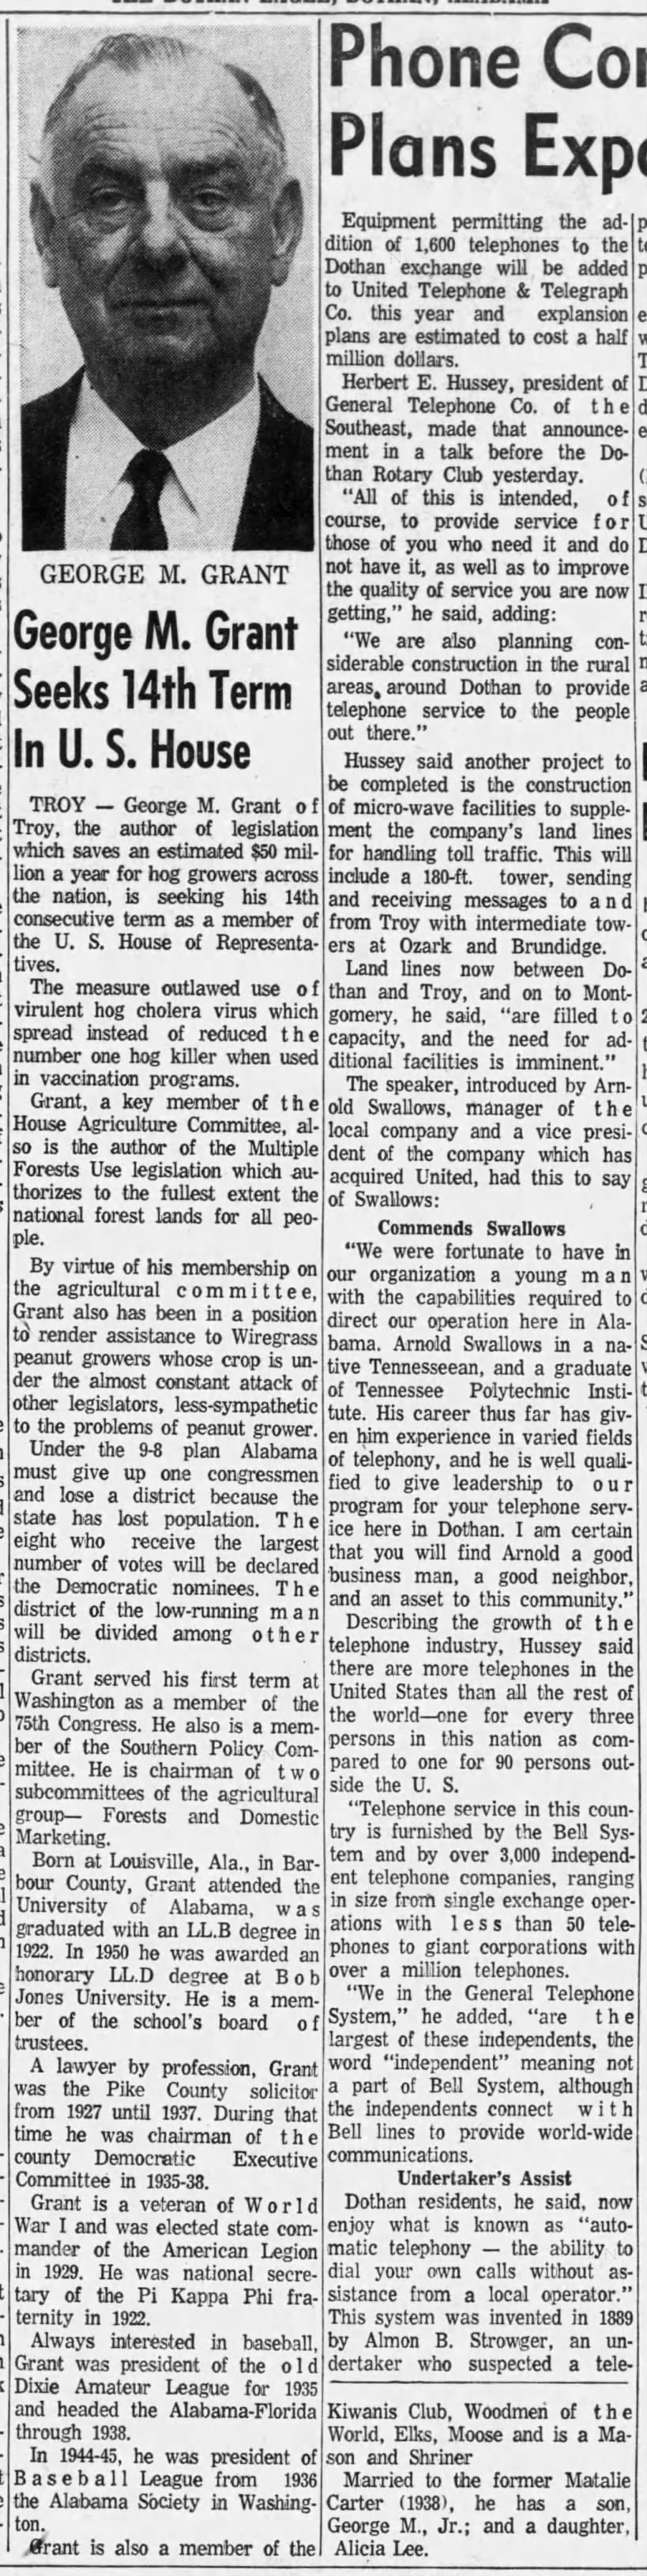 George M. Grant Seeks 14th Term in U.S. House; 13 Mar 1962; The Dothan Eagle